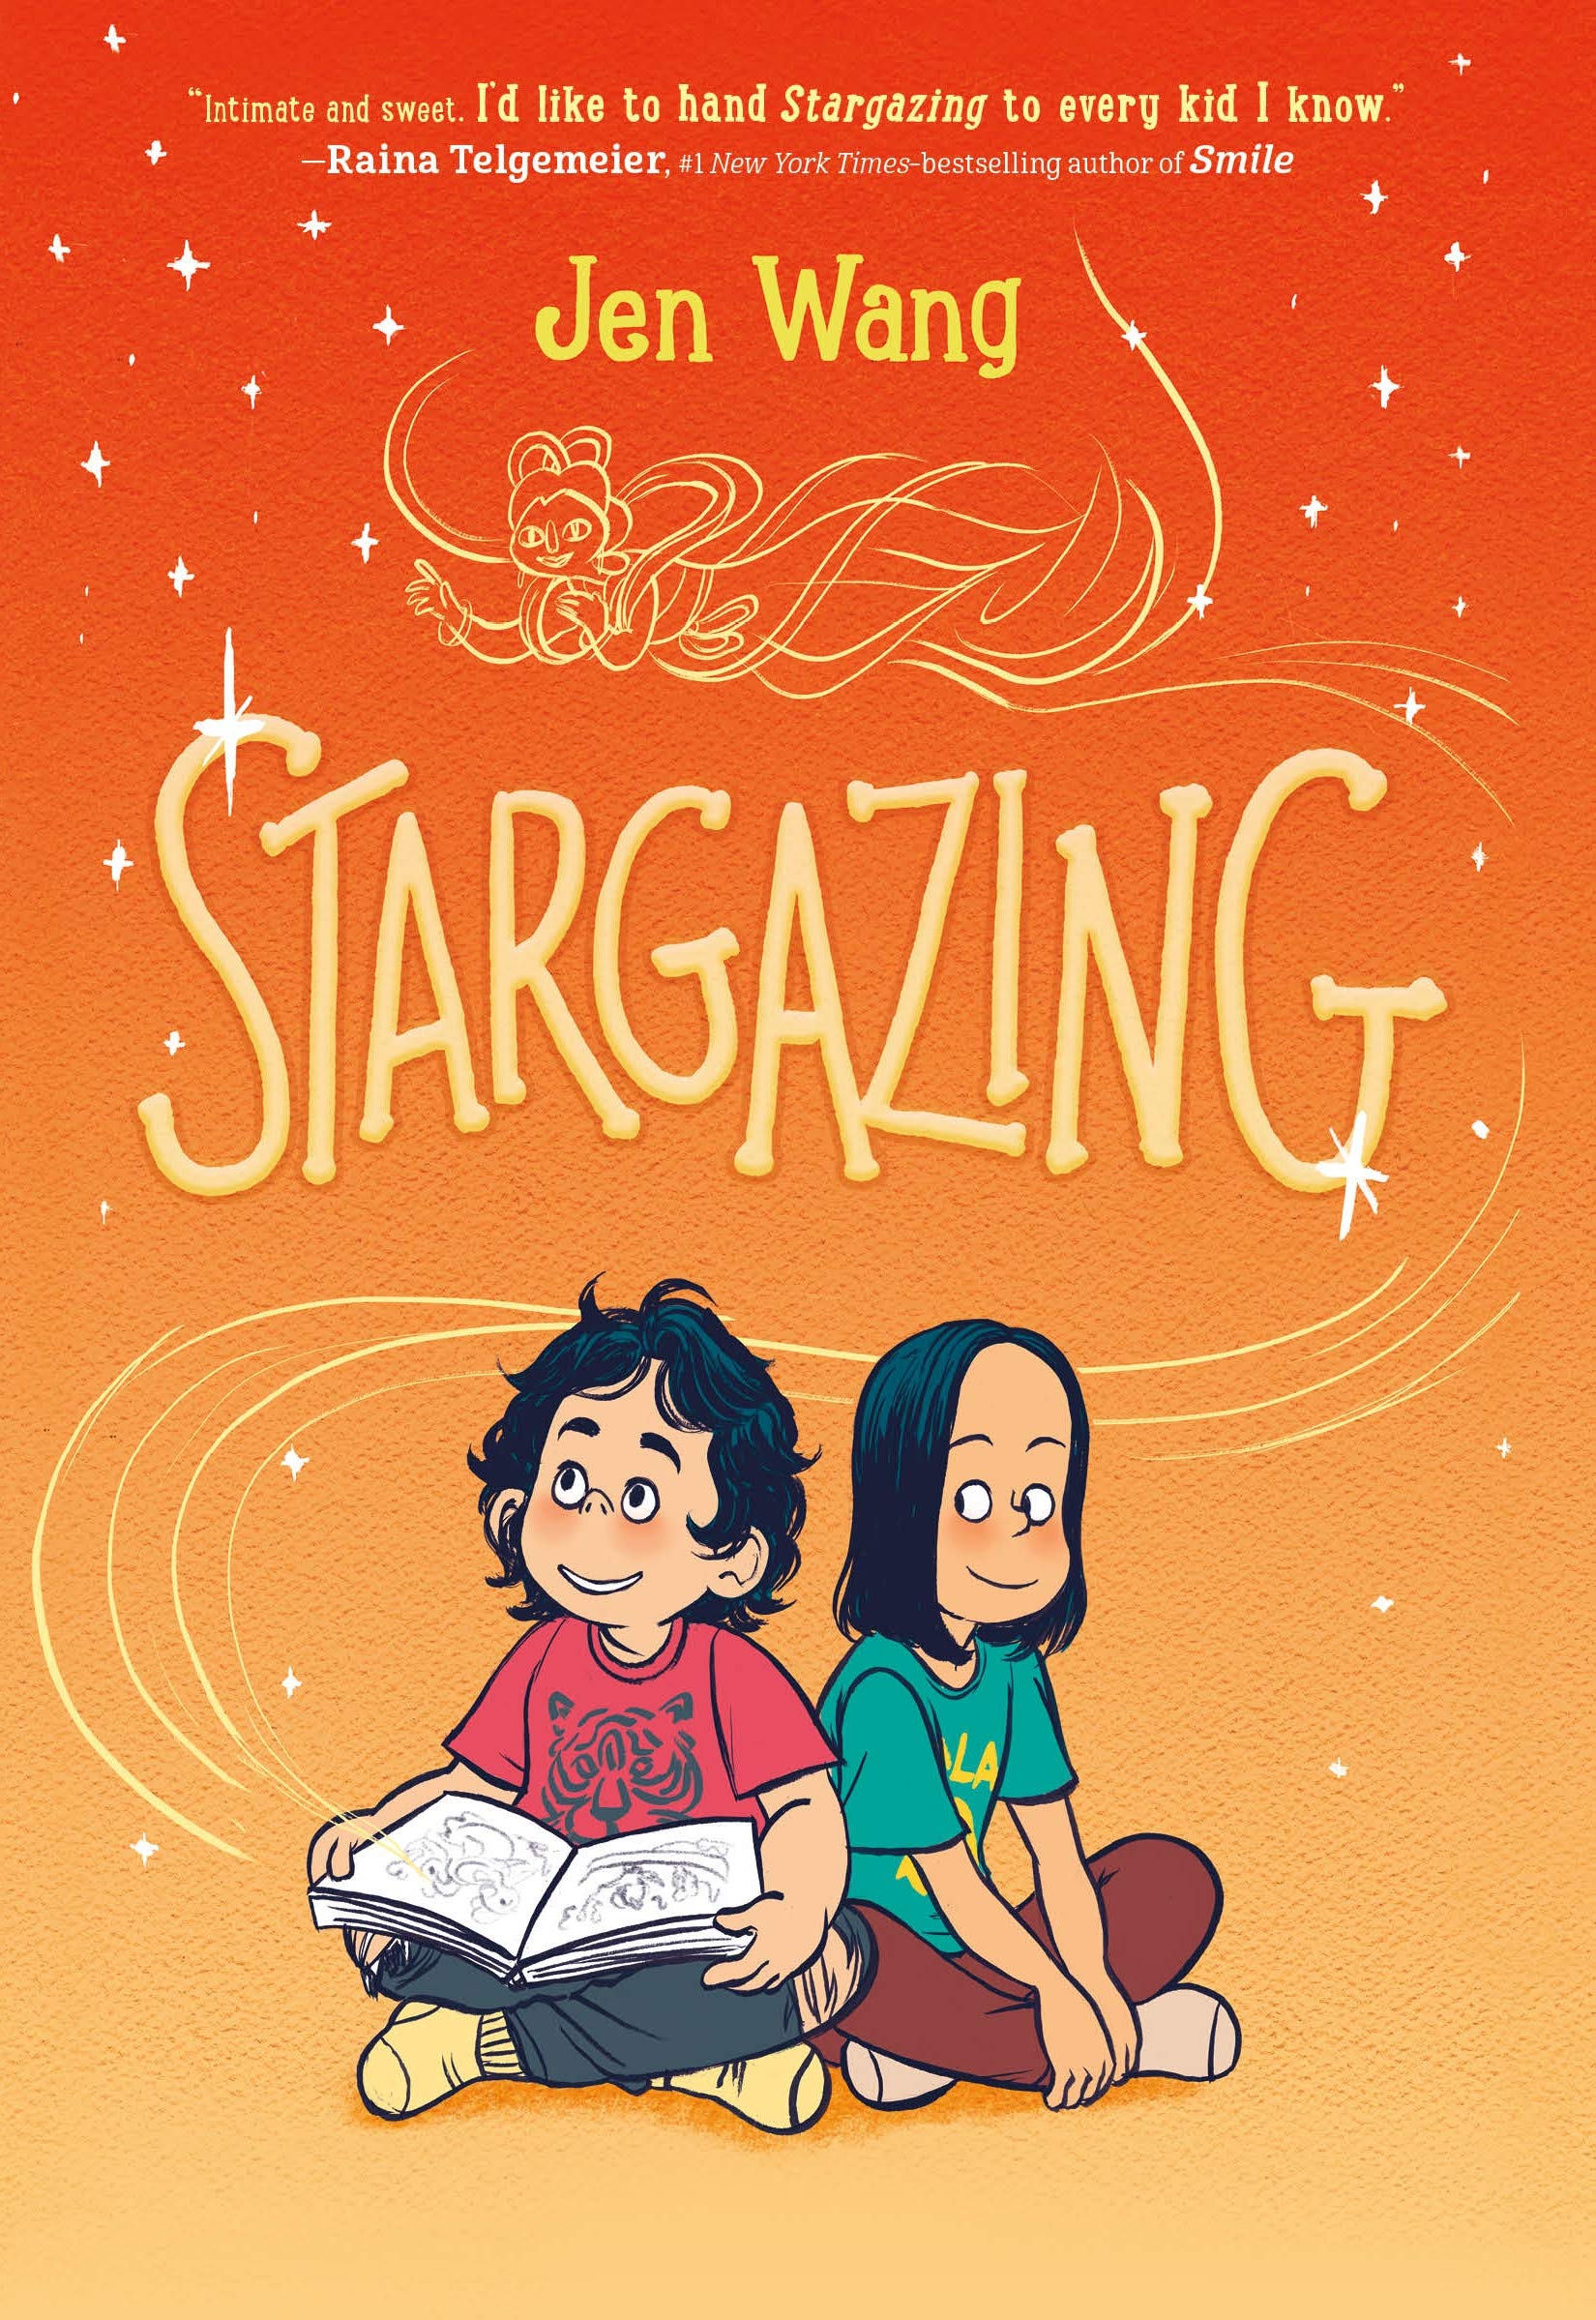 Best Comics of 2019: Stargazing